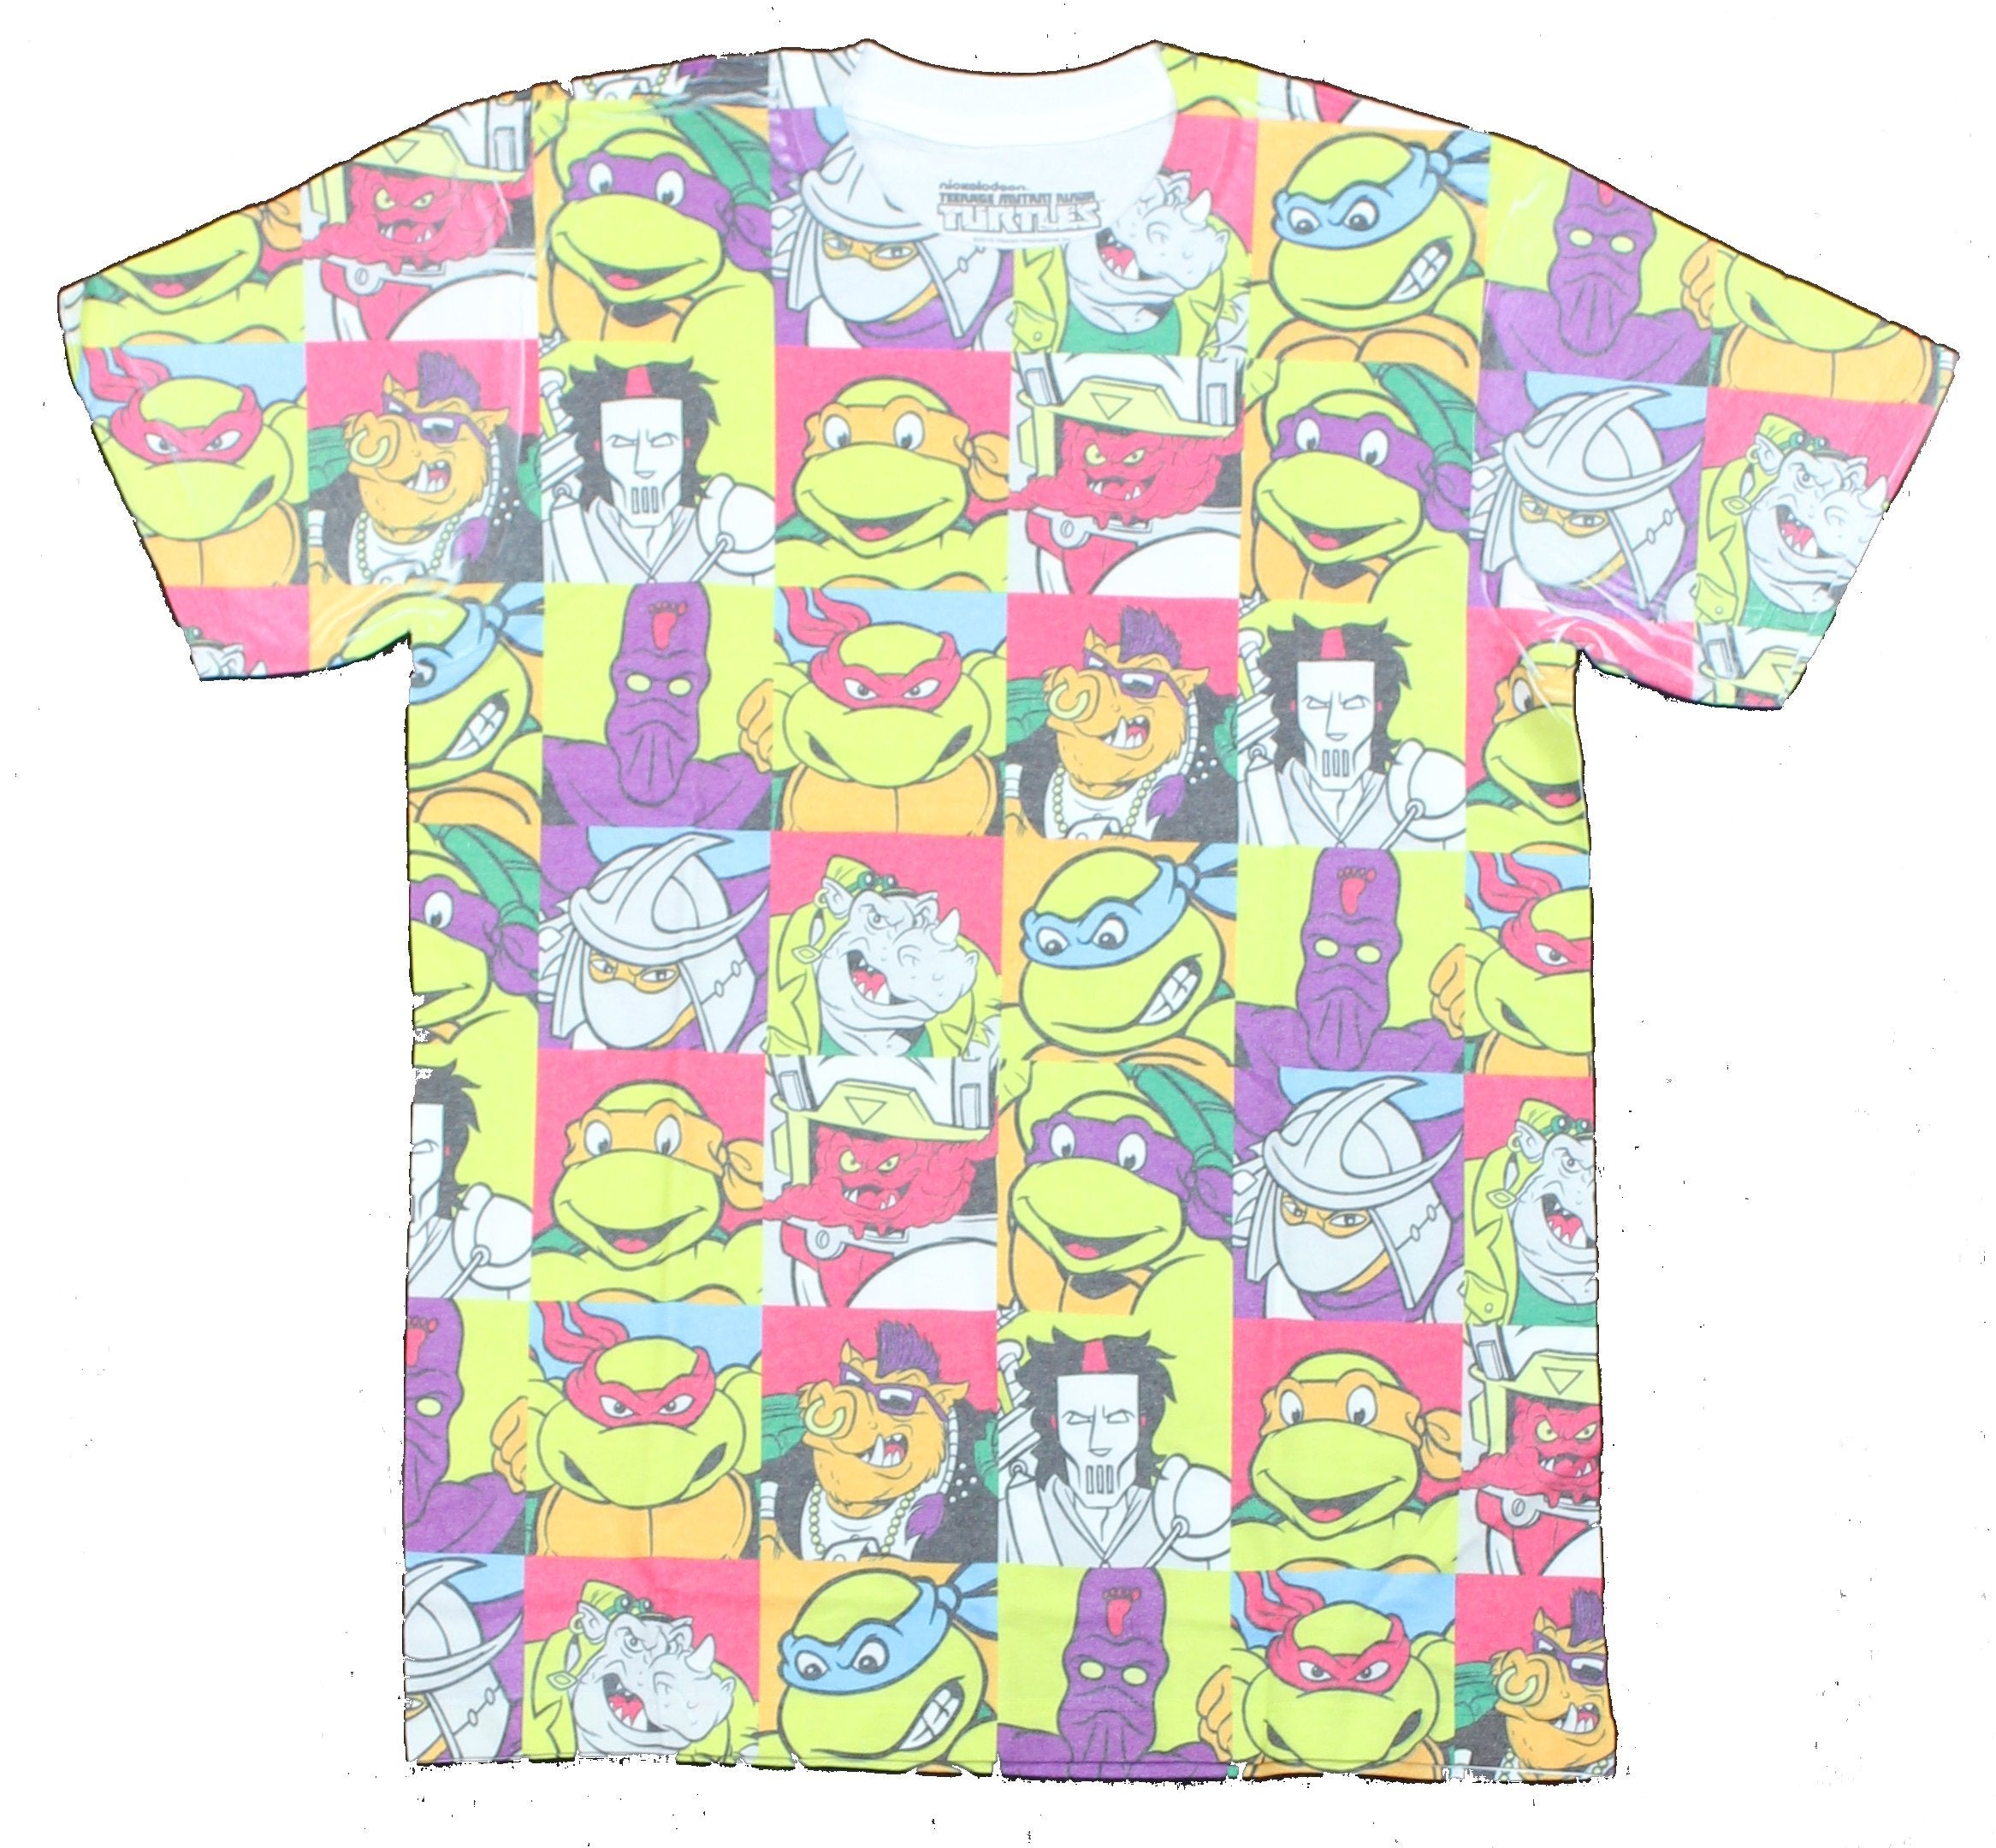 Teenage Mutant Ninja Turtles Men's Group Graphic T-Shirt, White, X-Large, Cotton